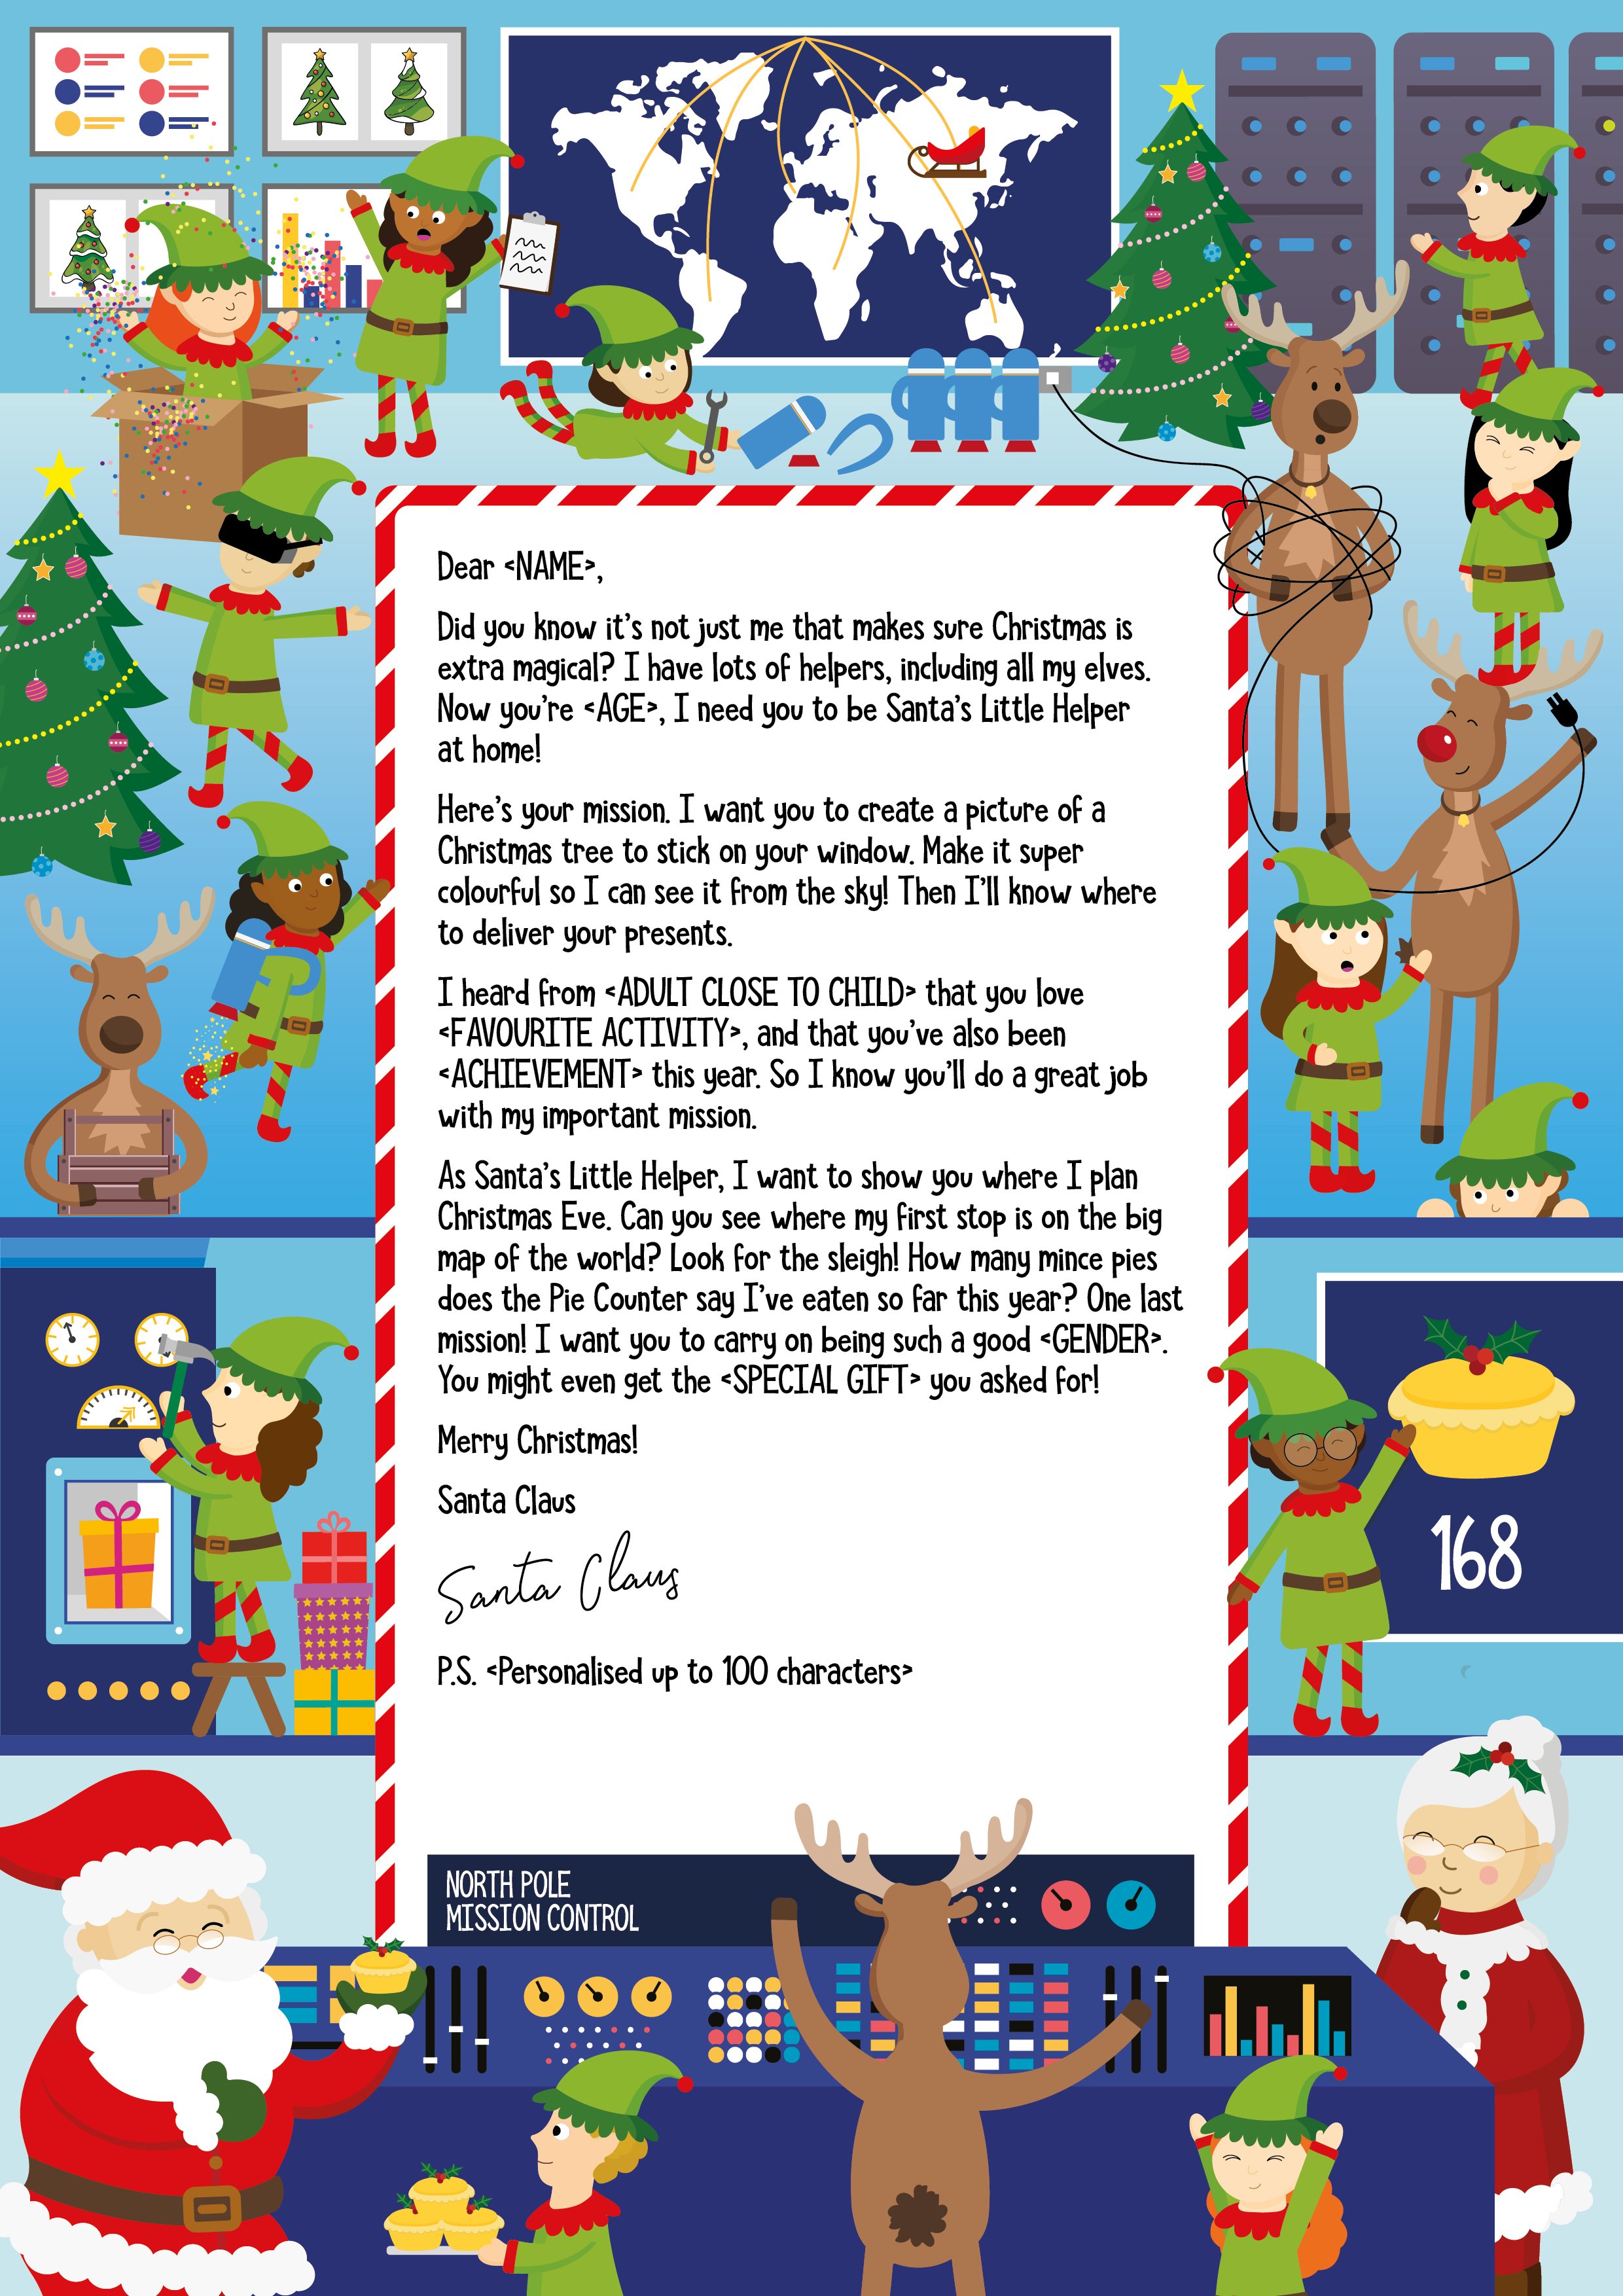 34116_art_NSPCC_Christmas_Letter_2021_Santas_Little_Helper_210x297mm_ENG.jpg